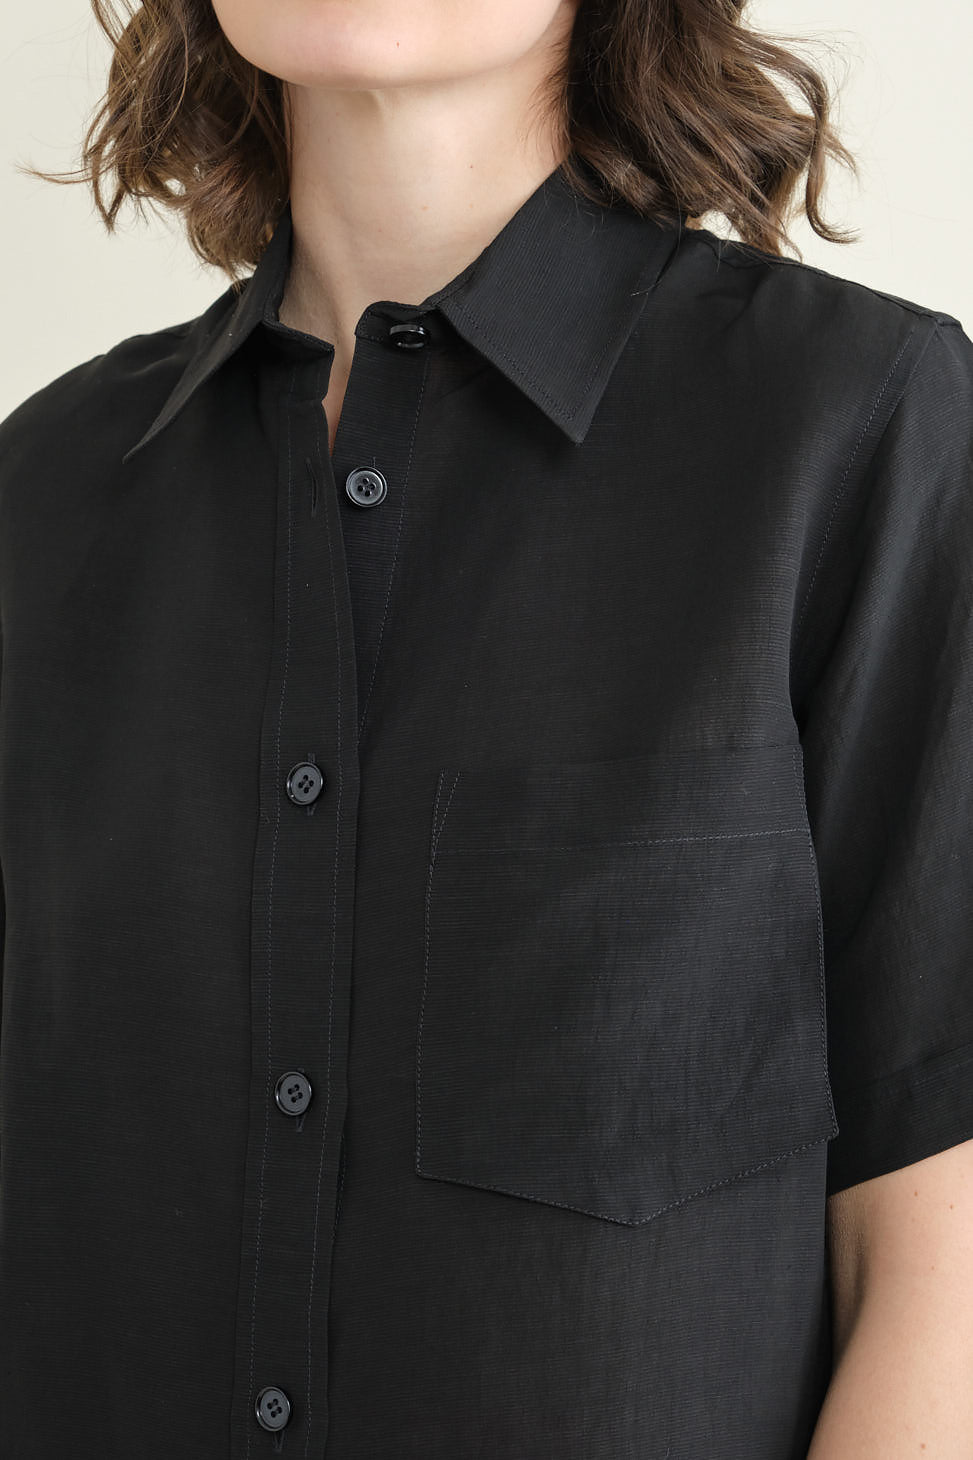 Pocket on Tarusi Short Sleeve Shirt in Black